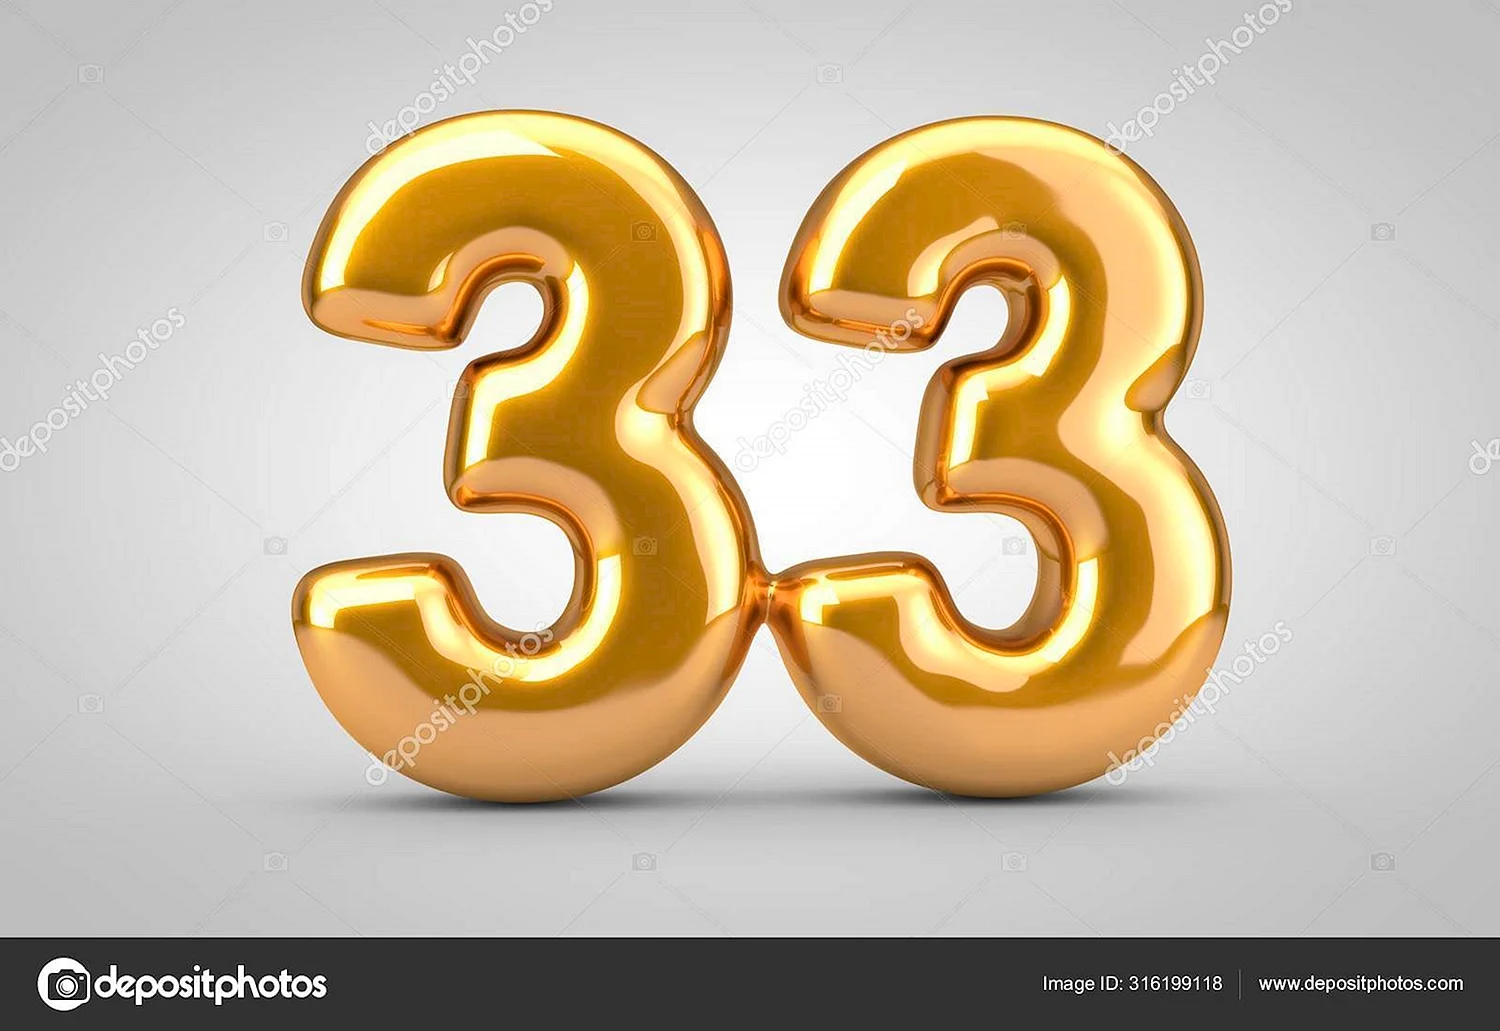 Красивая цифра 33